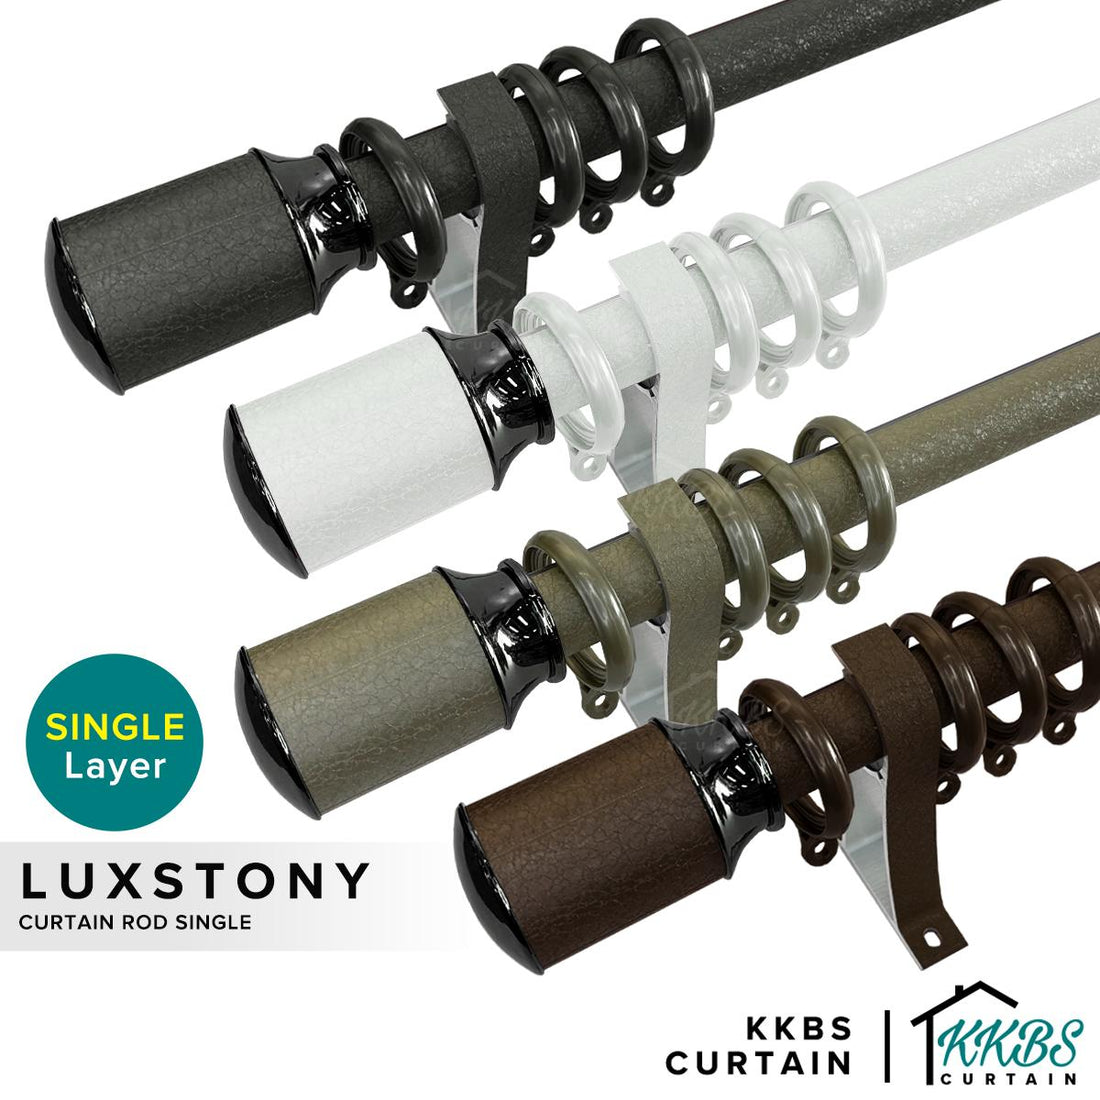 Luxstony Curtain Rod Single Complete Set